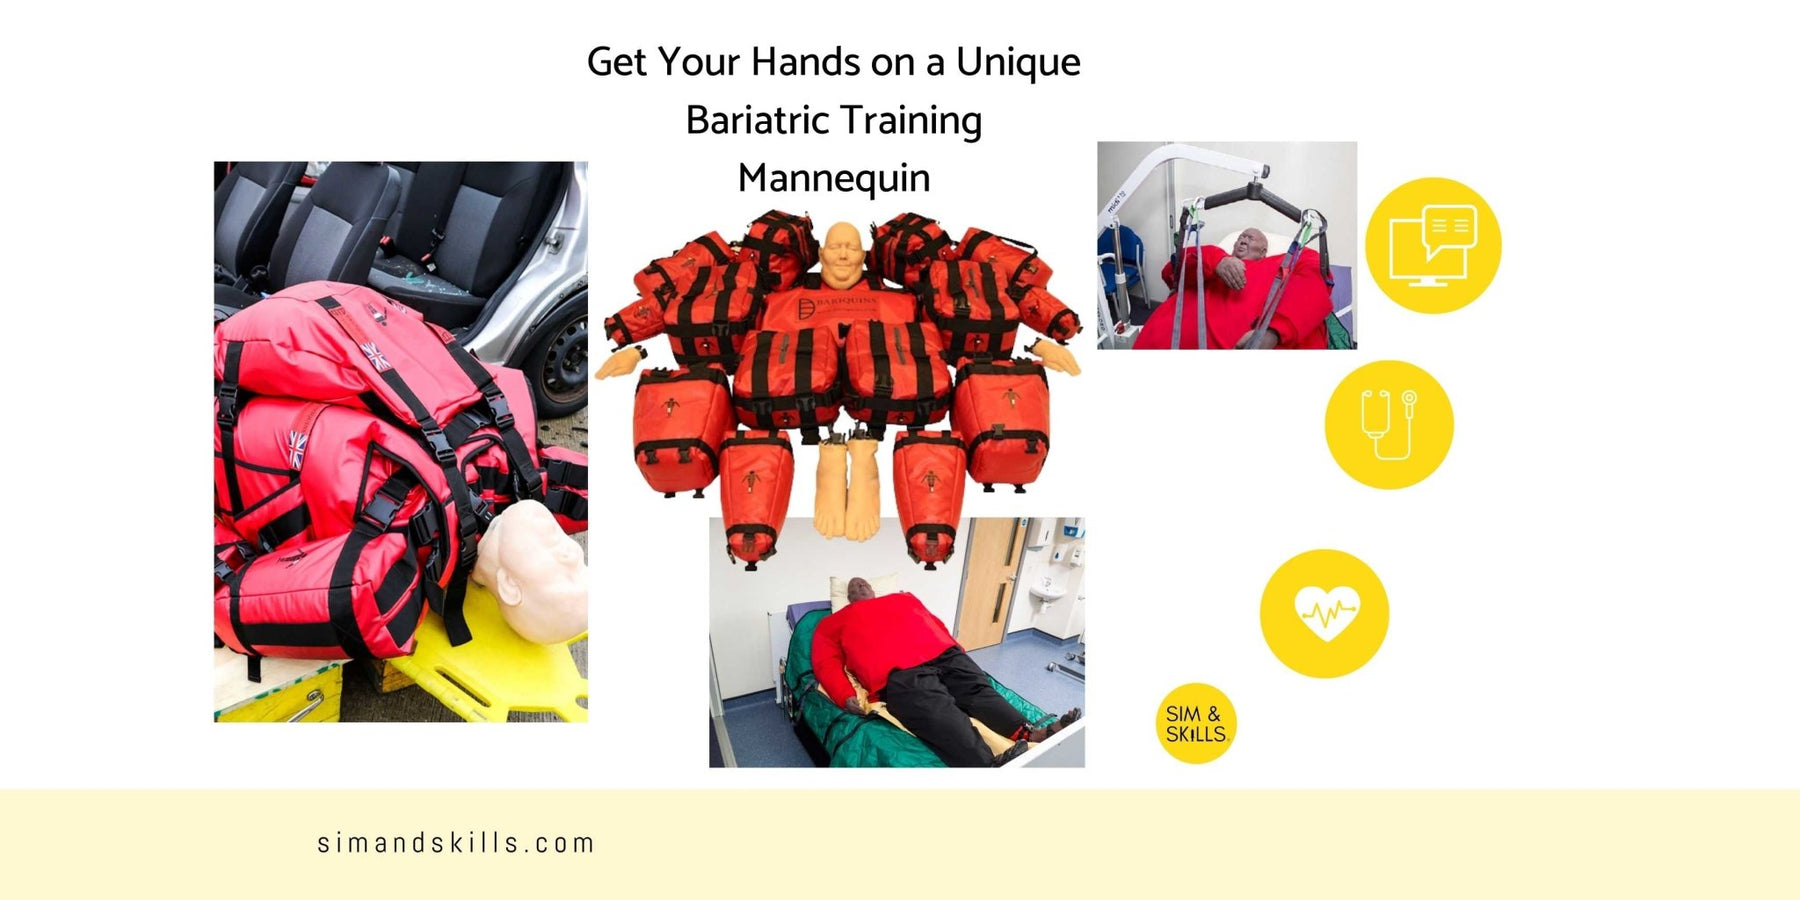 Get Your Hands on a Unique Bariatric Training Mannequin - Sim & Skills